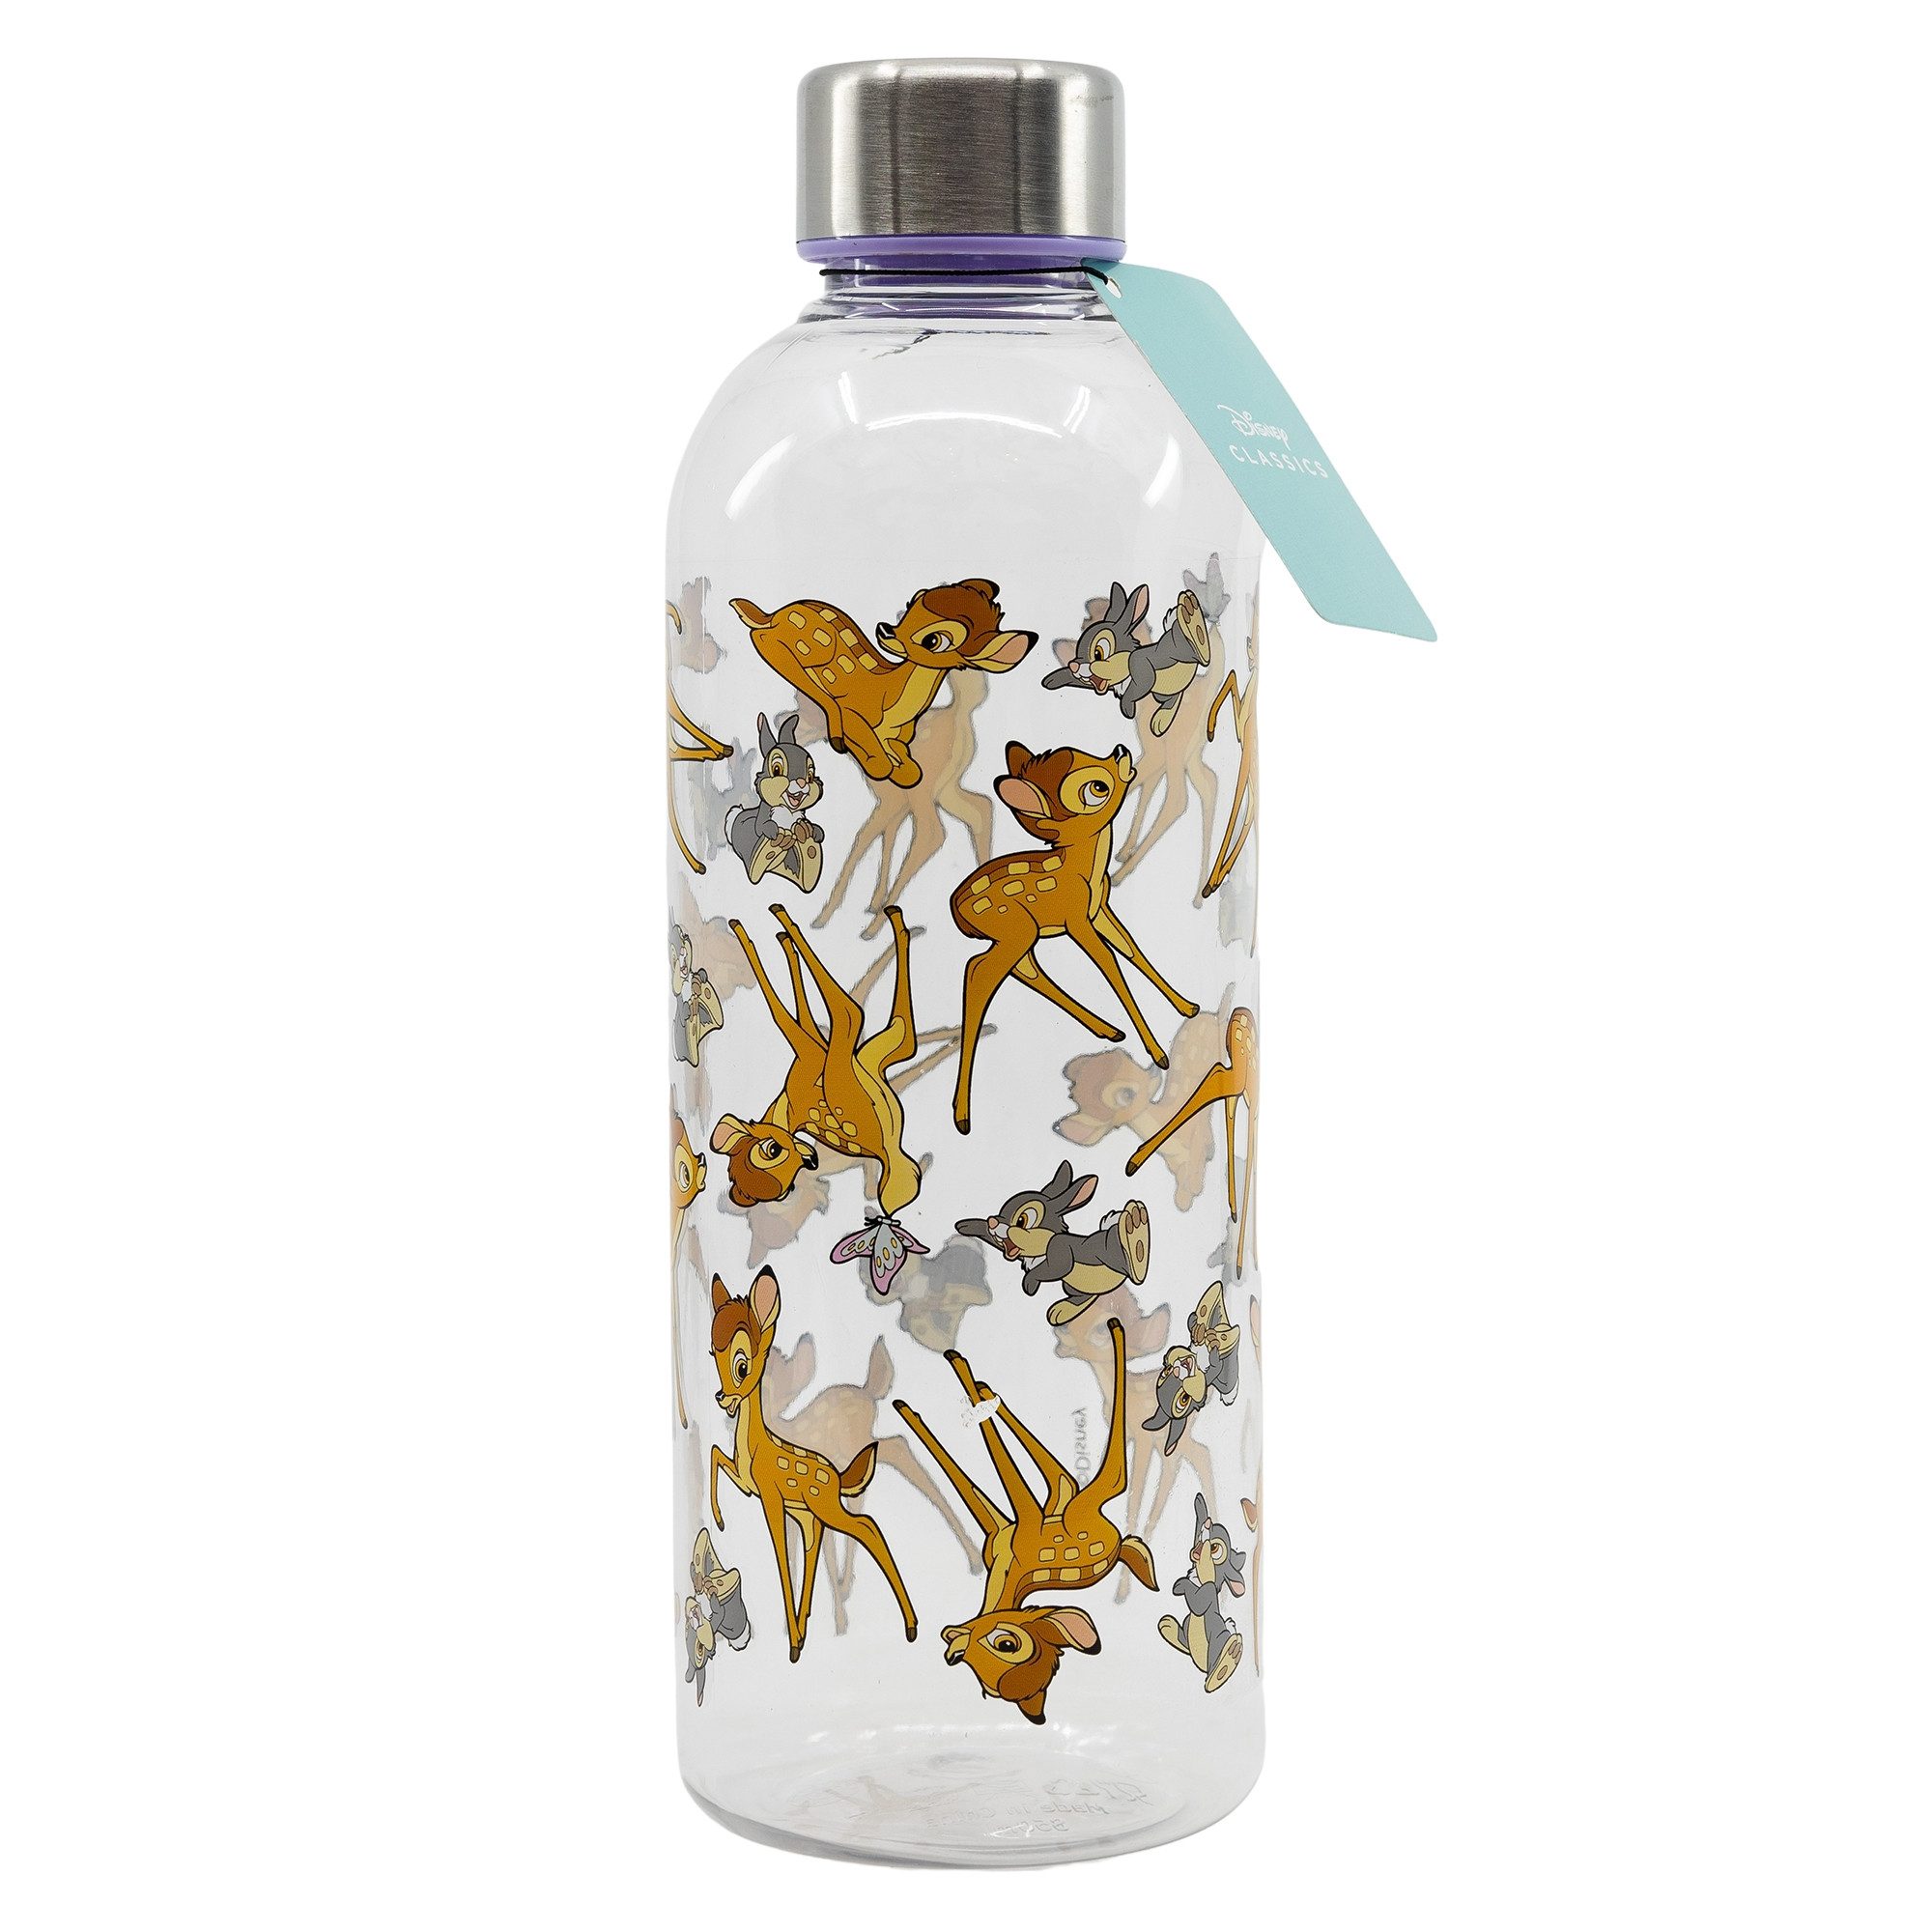 Stor Trinkflasche Stor - Disney Bambi Trinkflasche 850ml - Bambi Motiv, BPA-frei